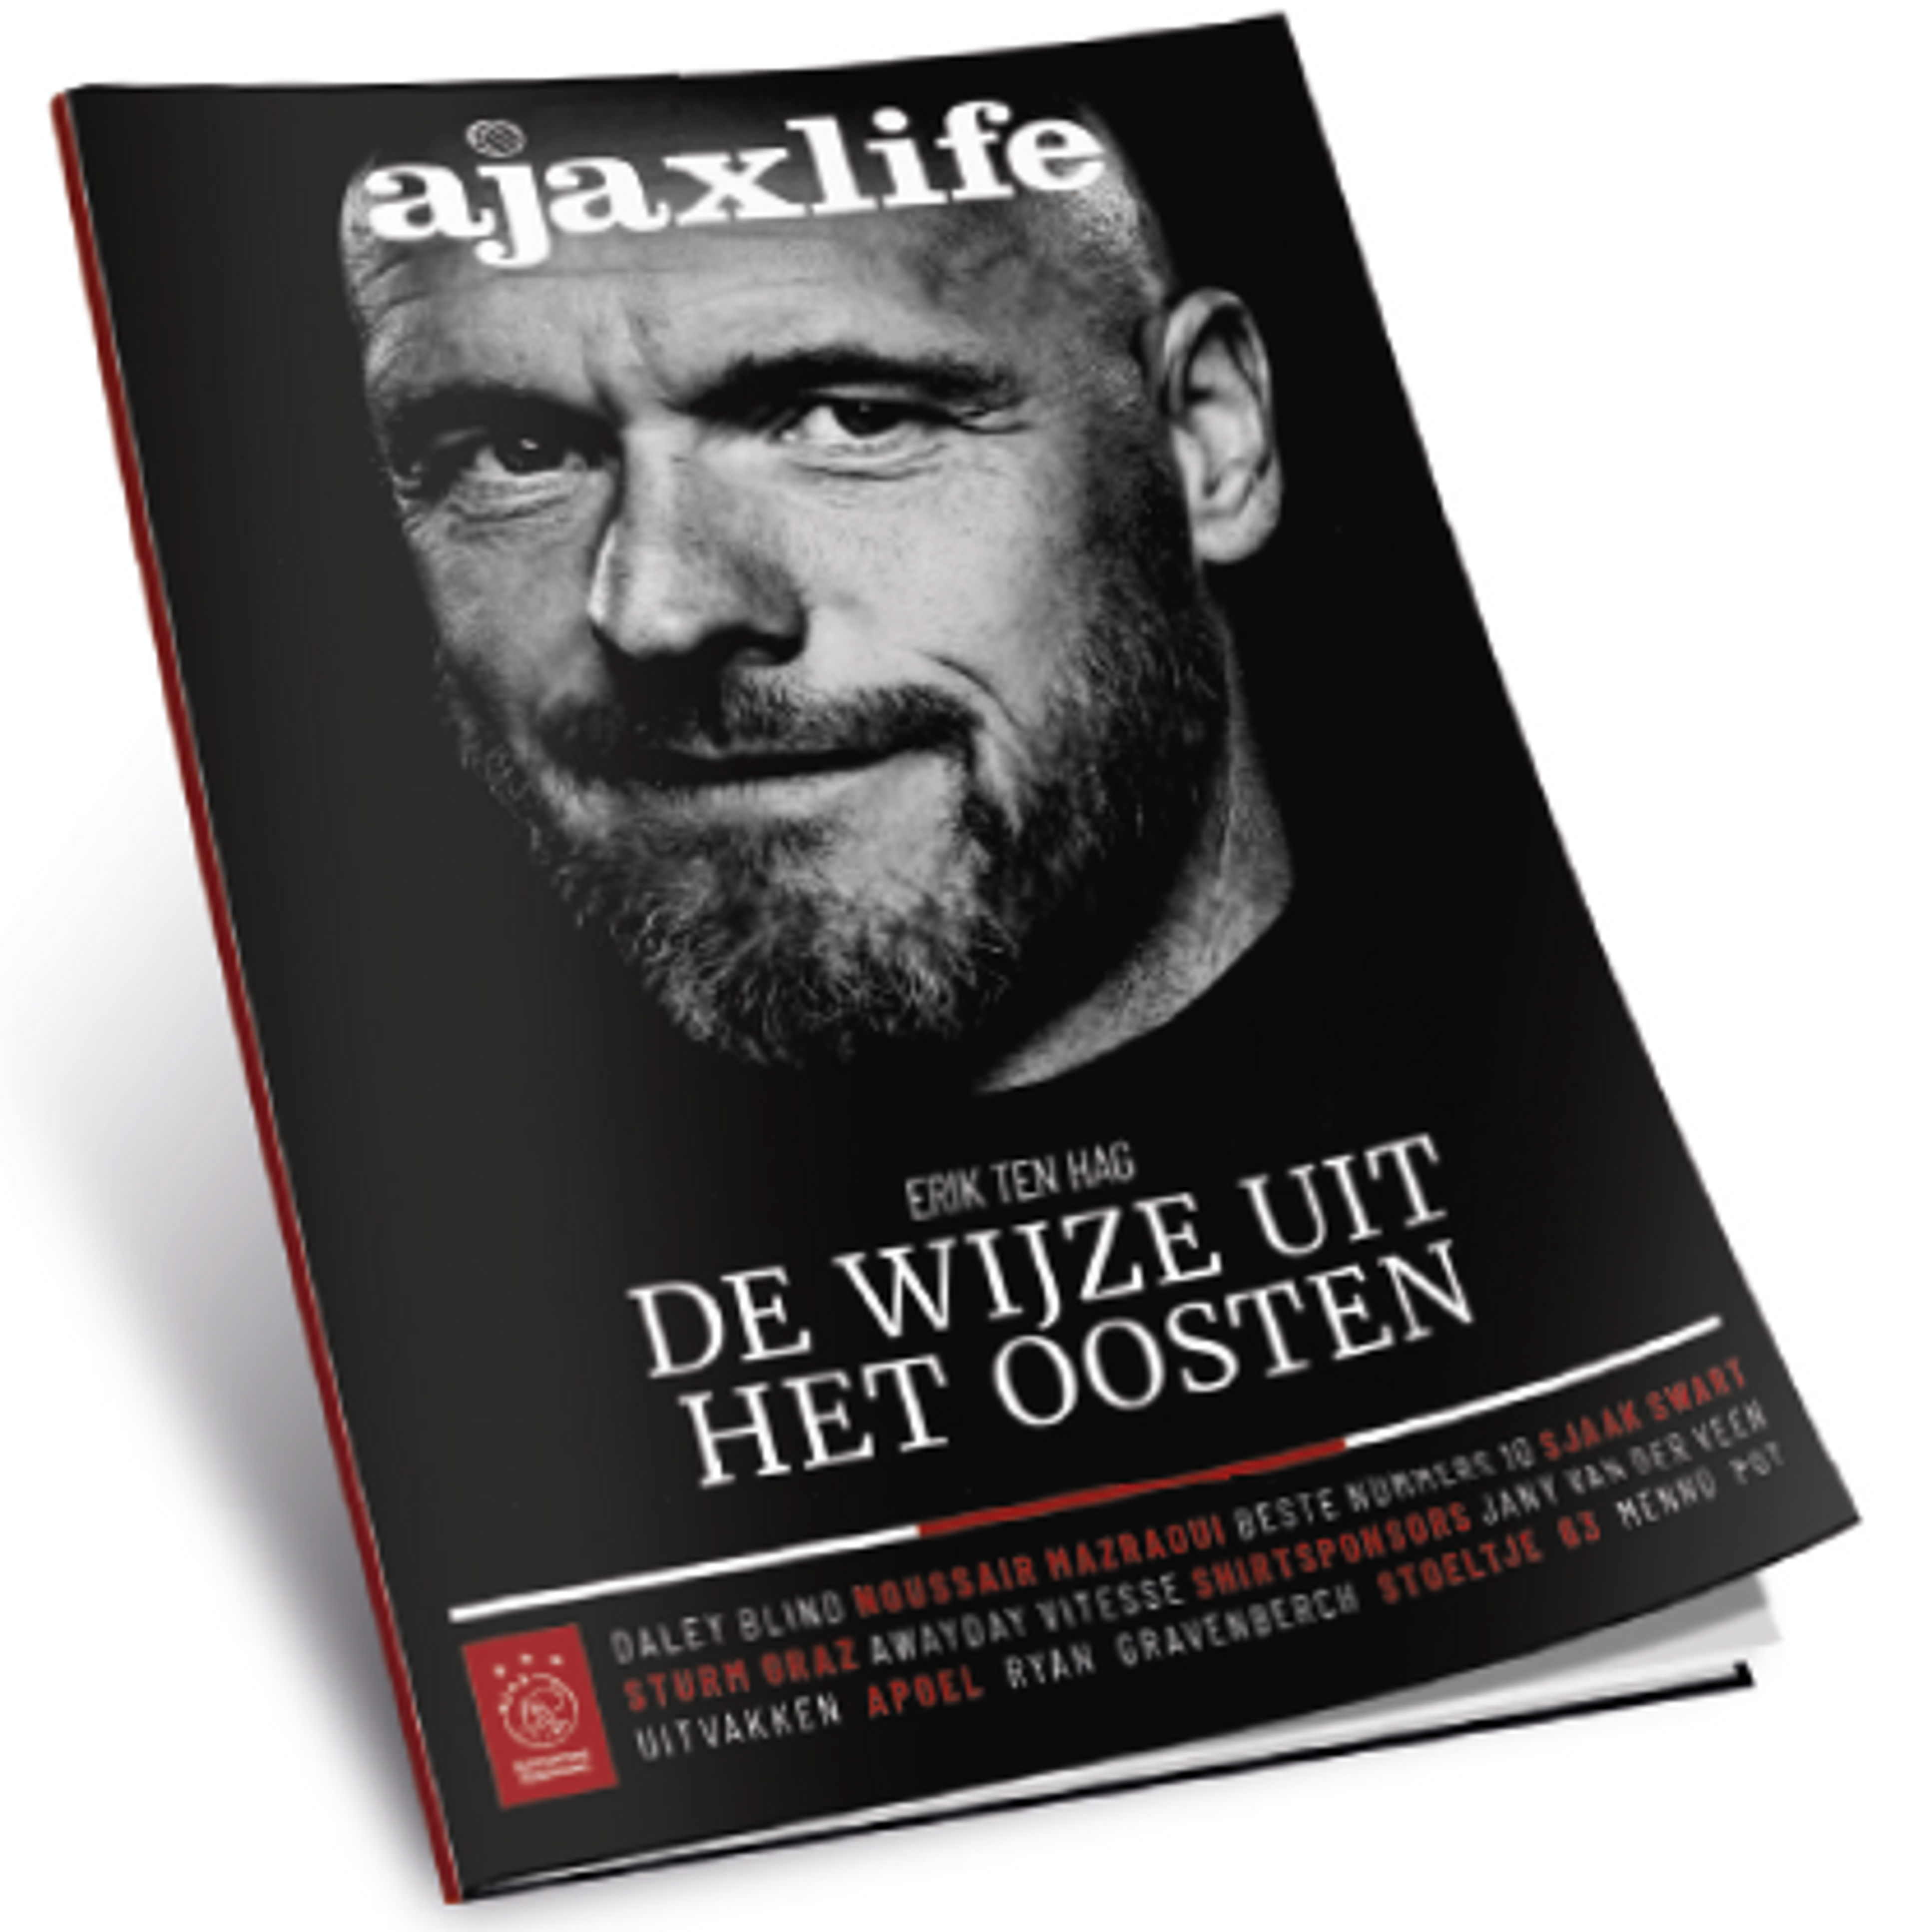 Ajax Life gaat verder als magazine